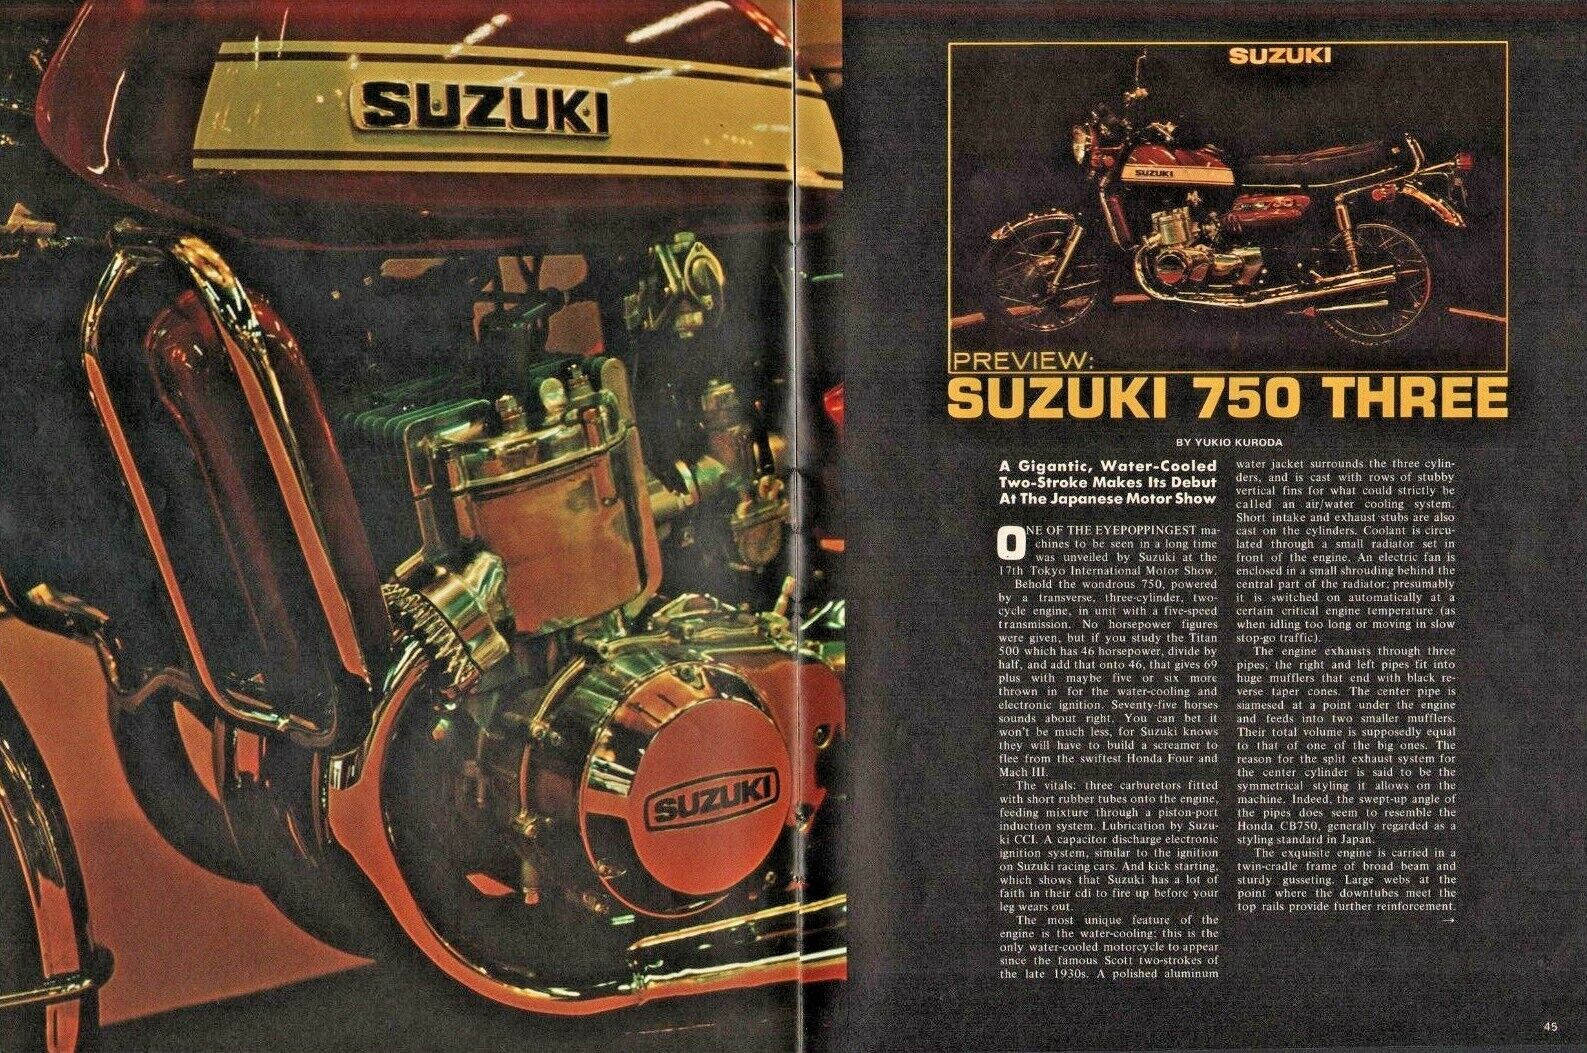 1971 Suzuki  750 Three - 4-Page Vintage Motorcycle Article